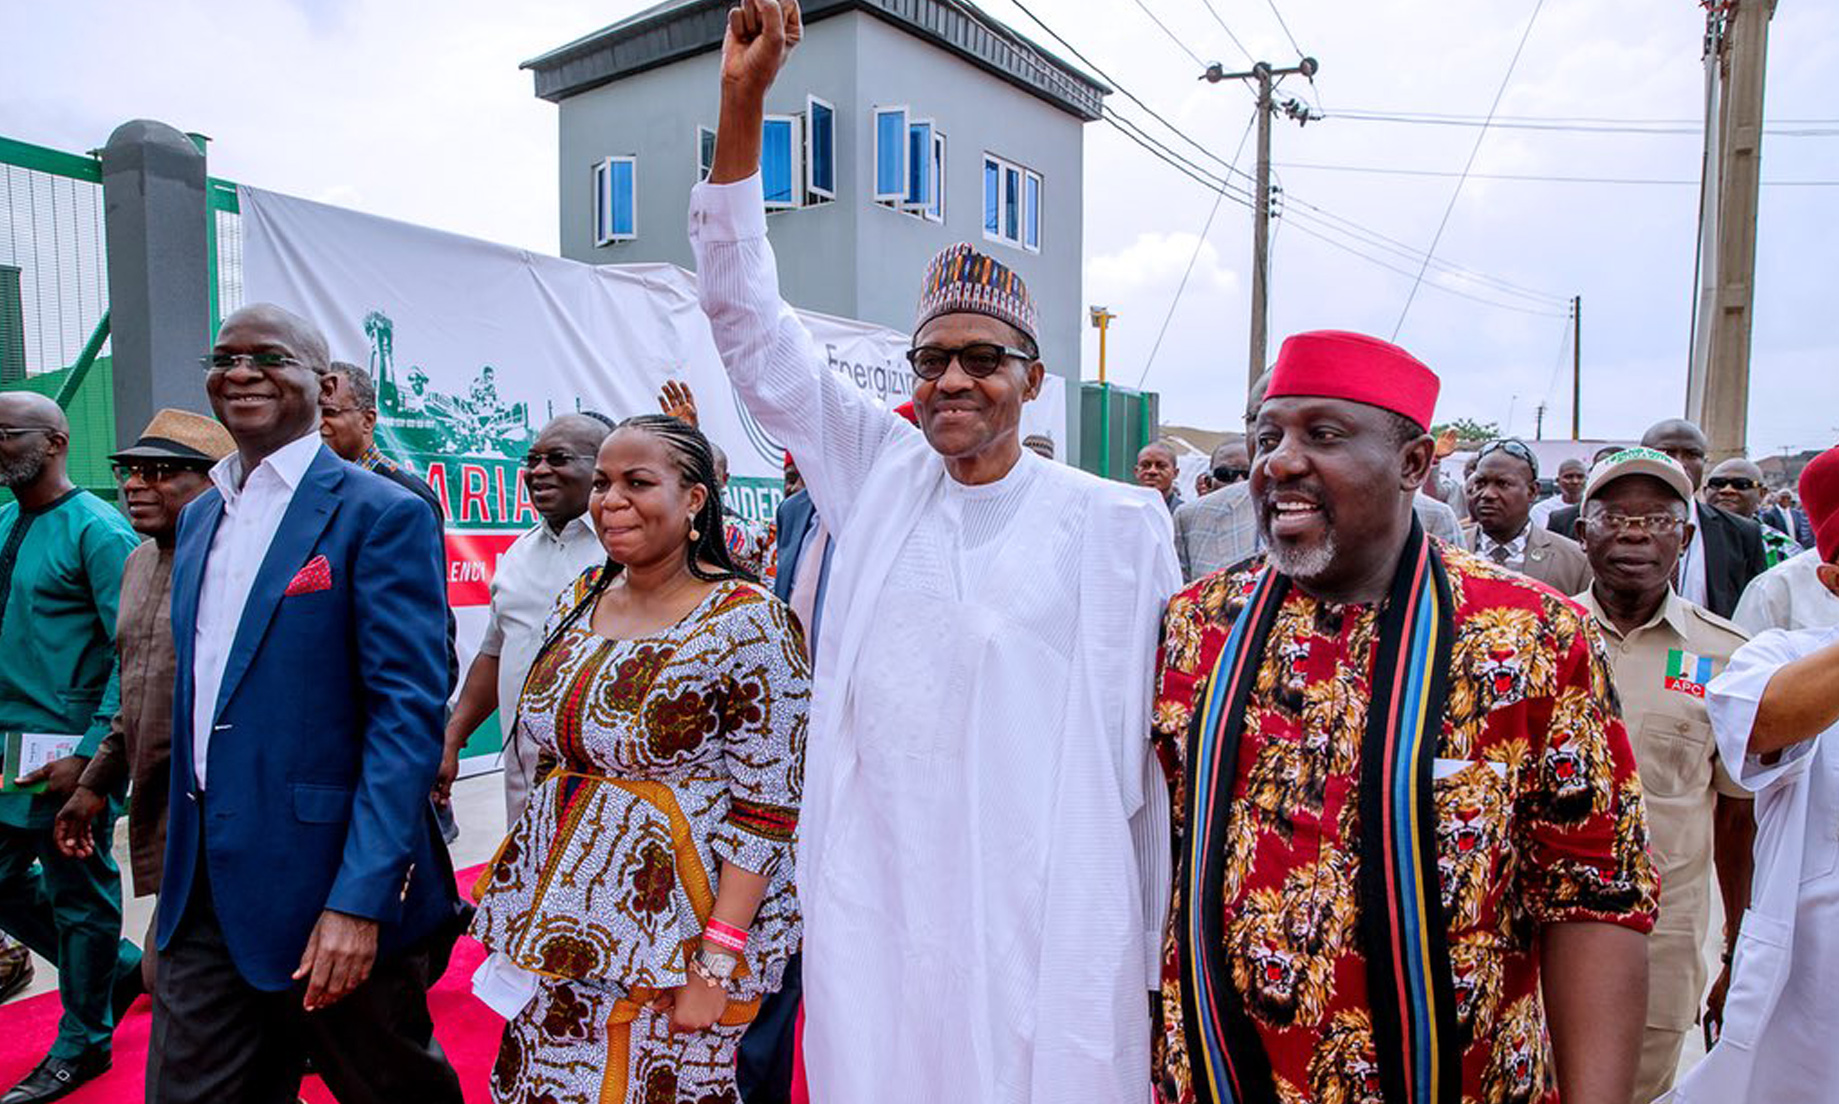 Nigeria’s Buhari ahead in presidential election